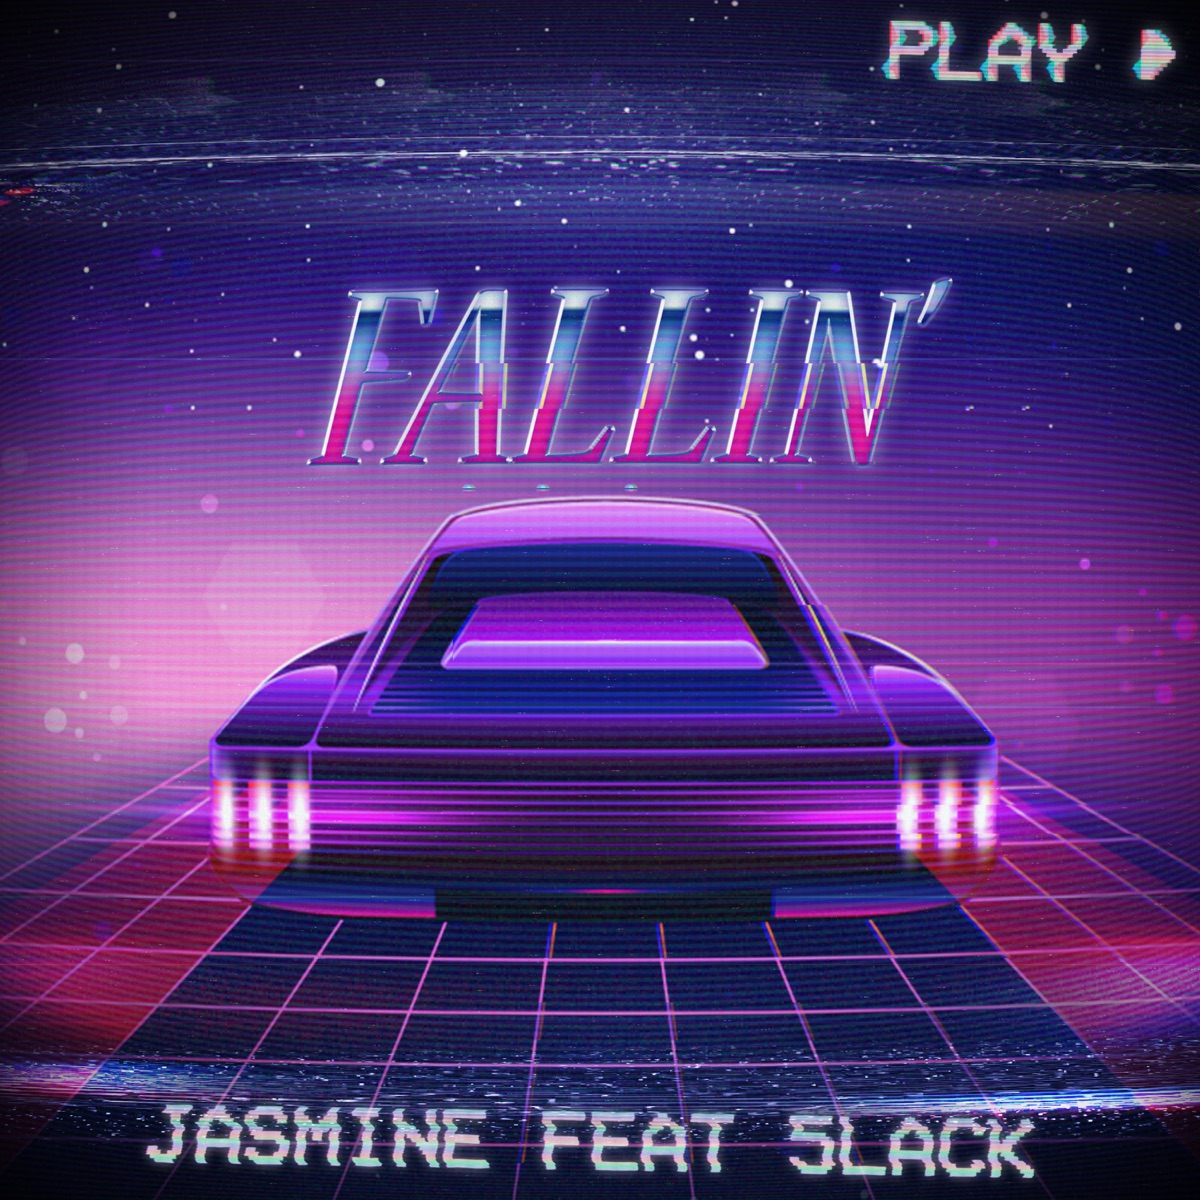 『JASMINE - FALLIN’ feat. 5lack』収録の『FALLIN’ feat. 5lack』ジャケット